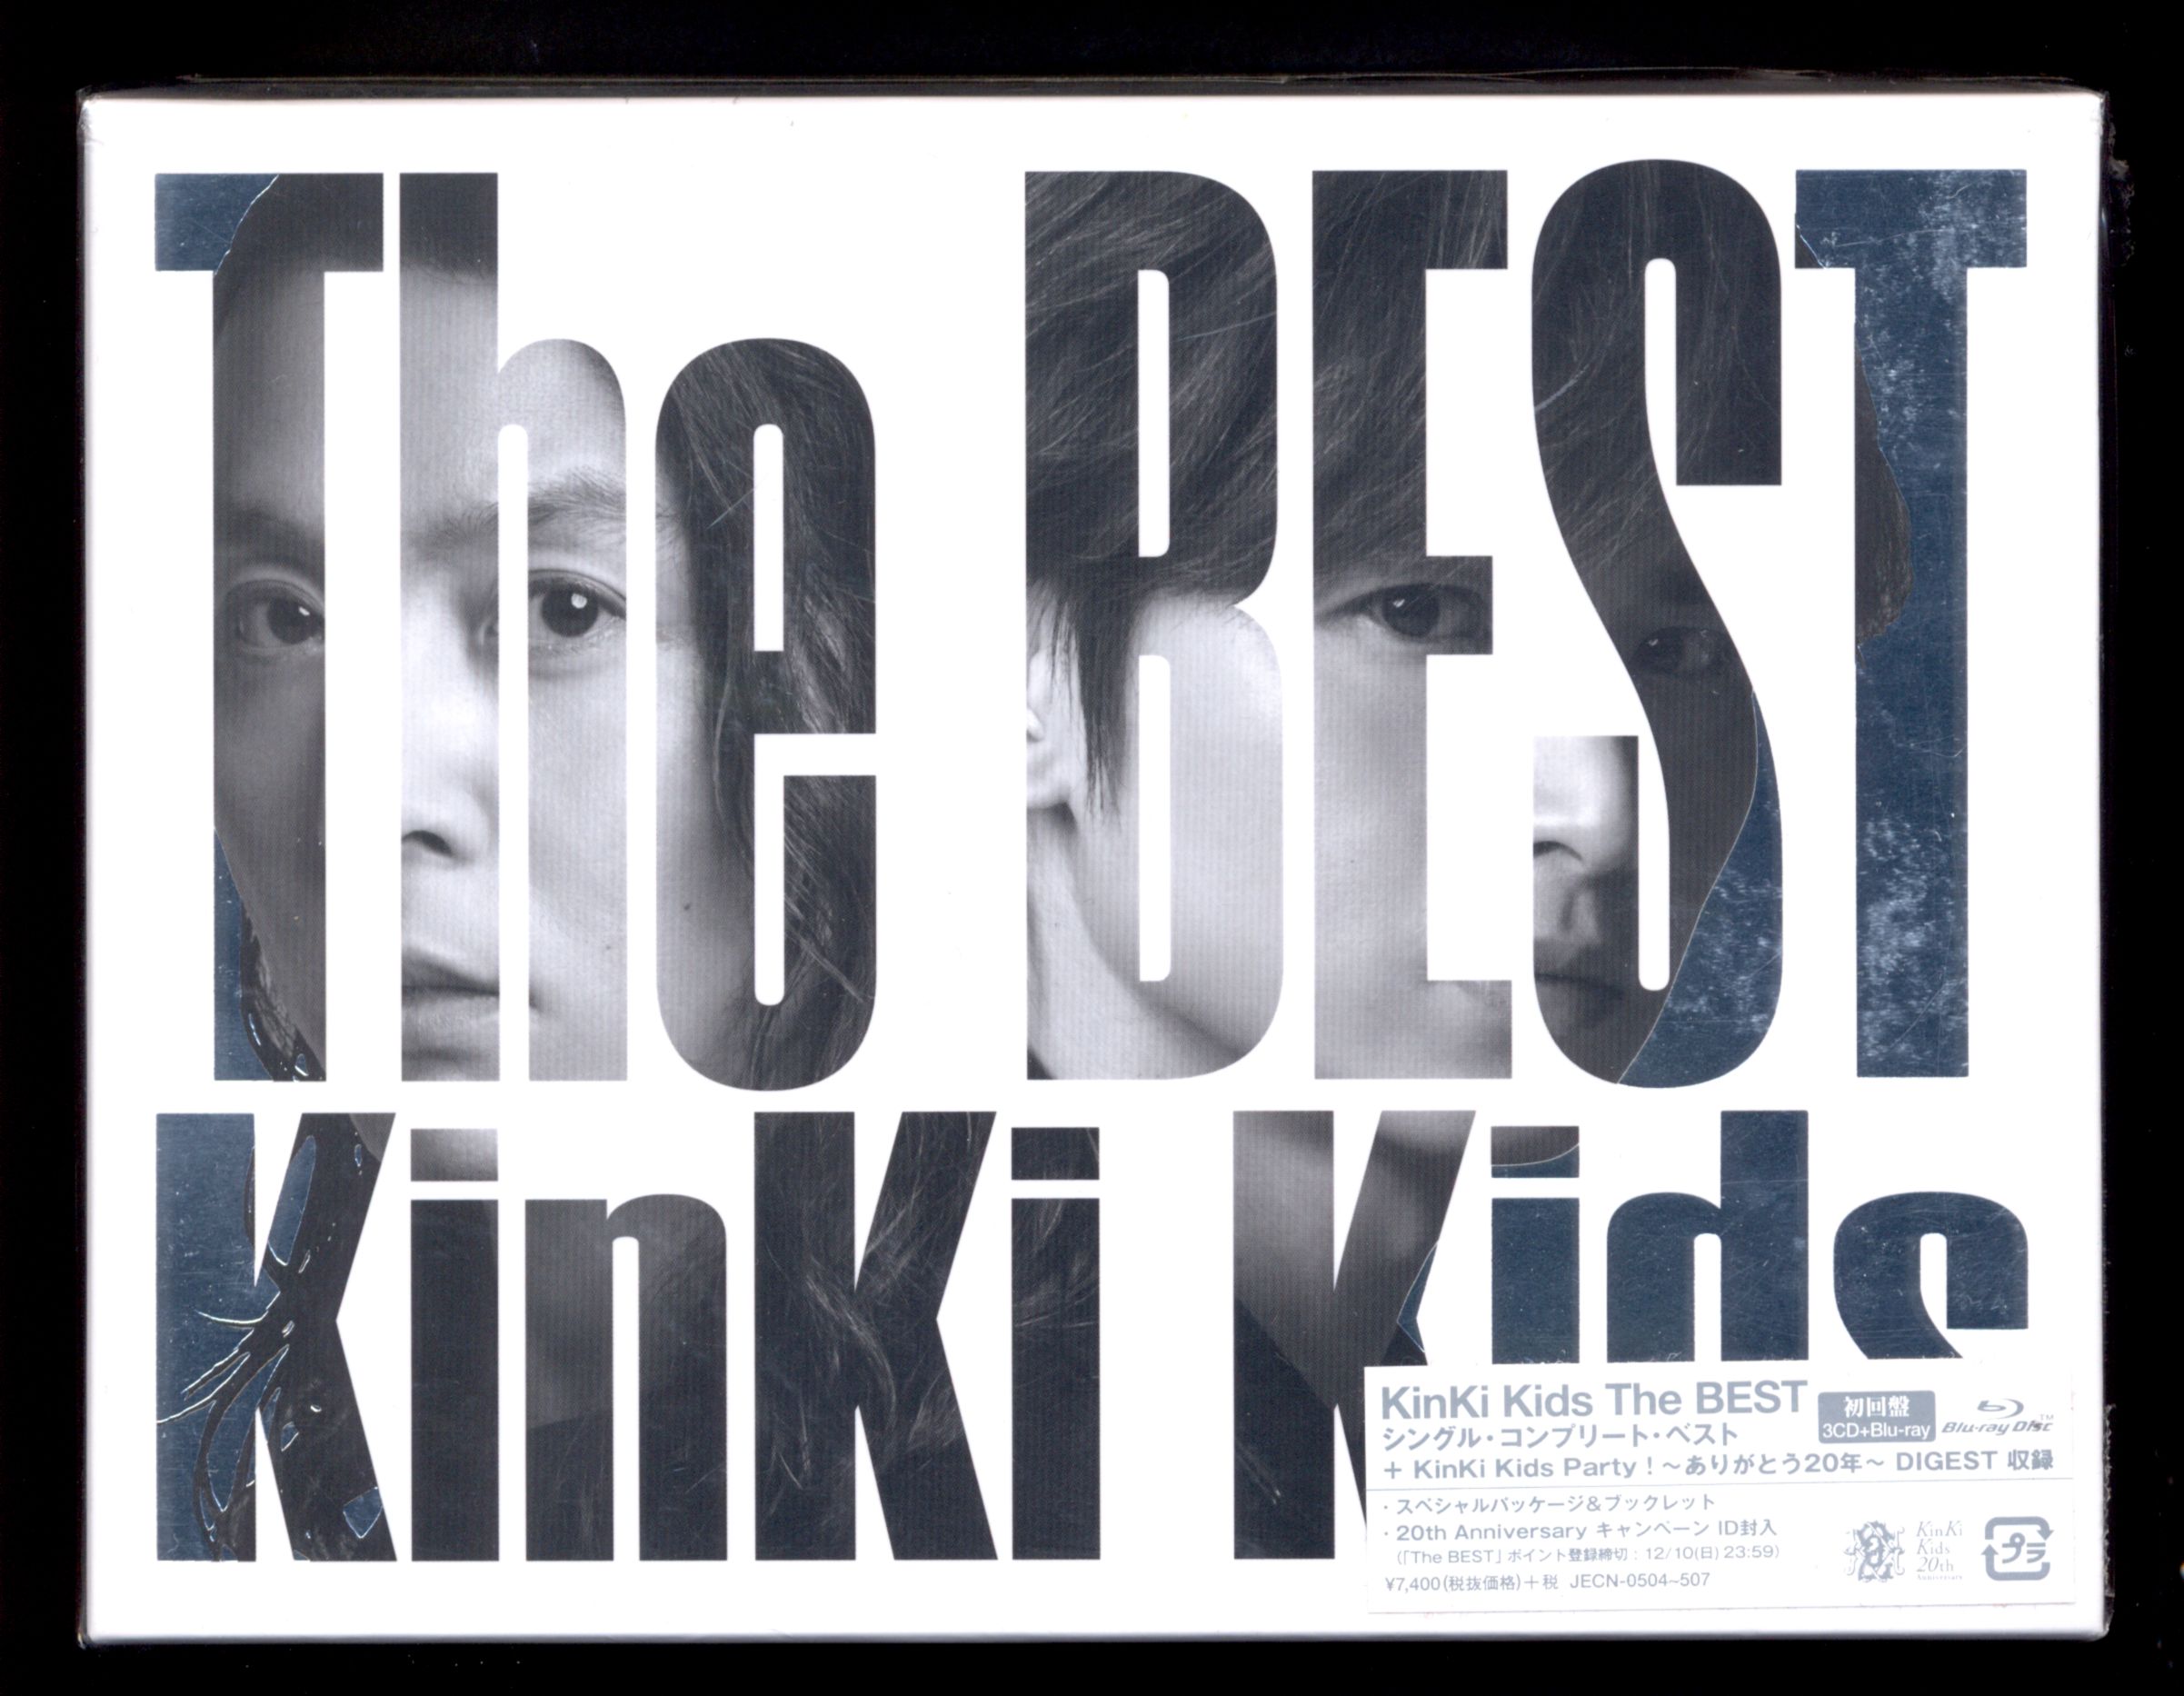 Kids KinKi Kids KinKi The BEST Blu-Ray First edition Edition 3CD 